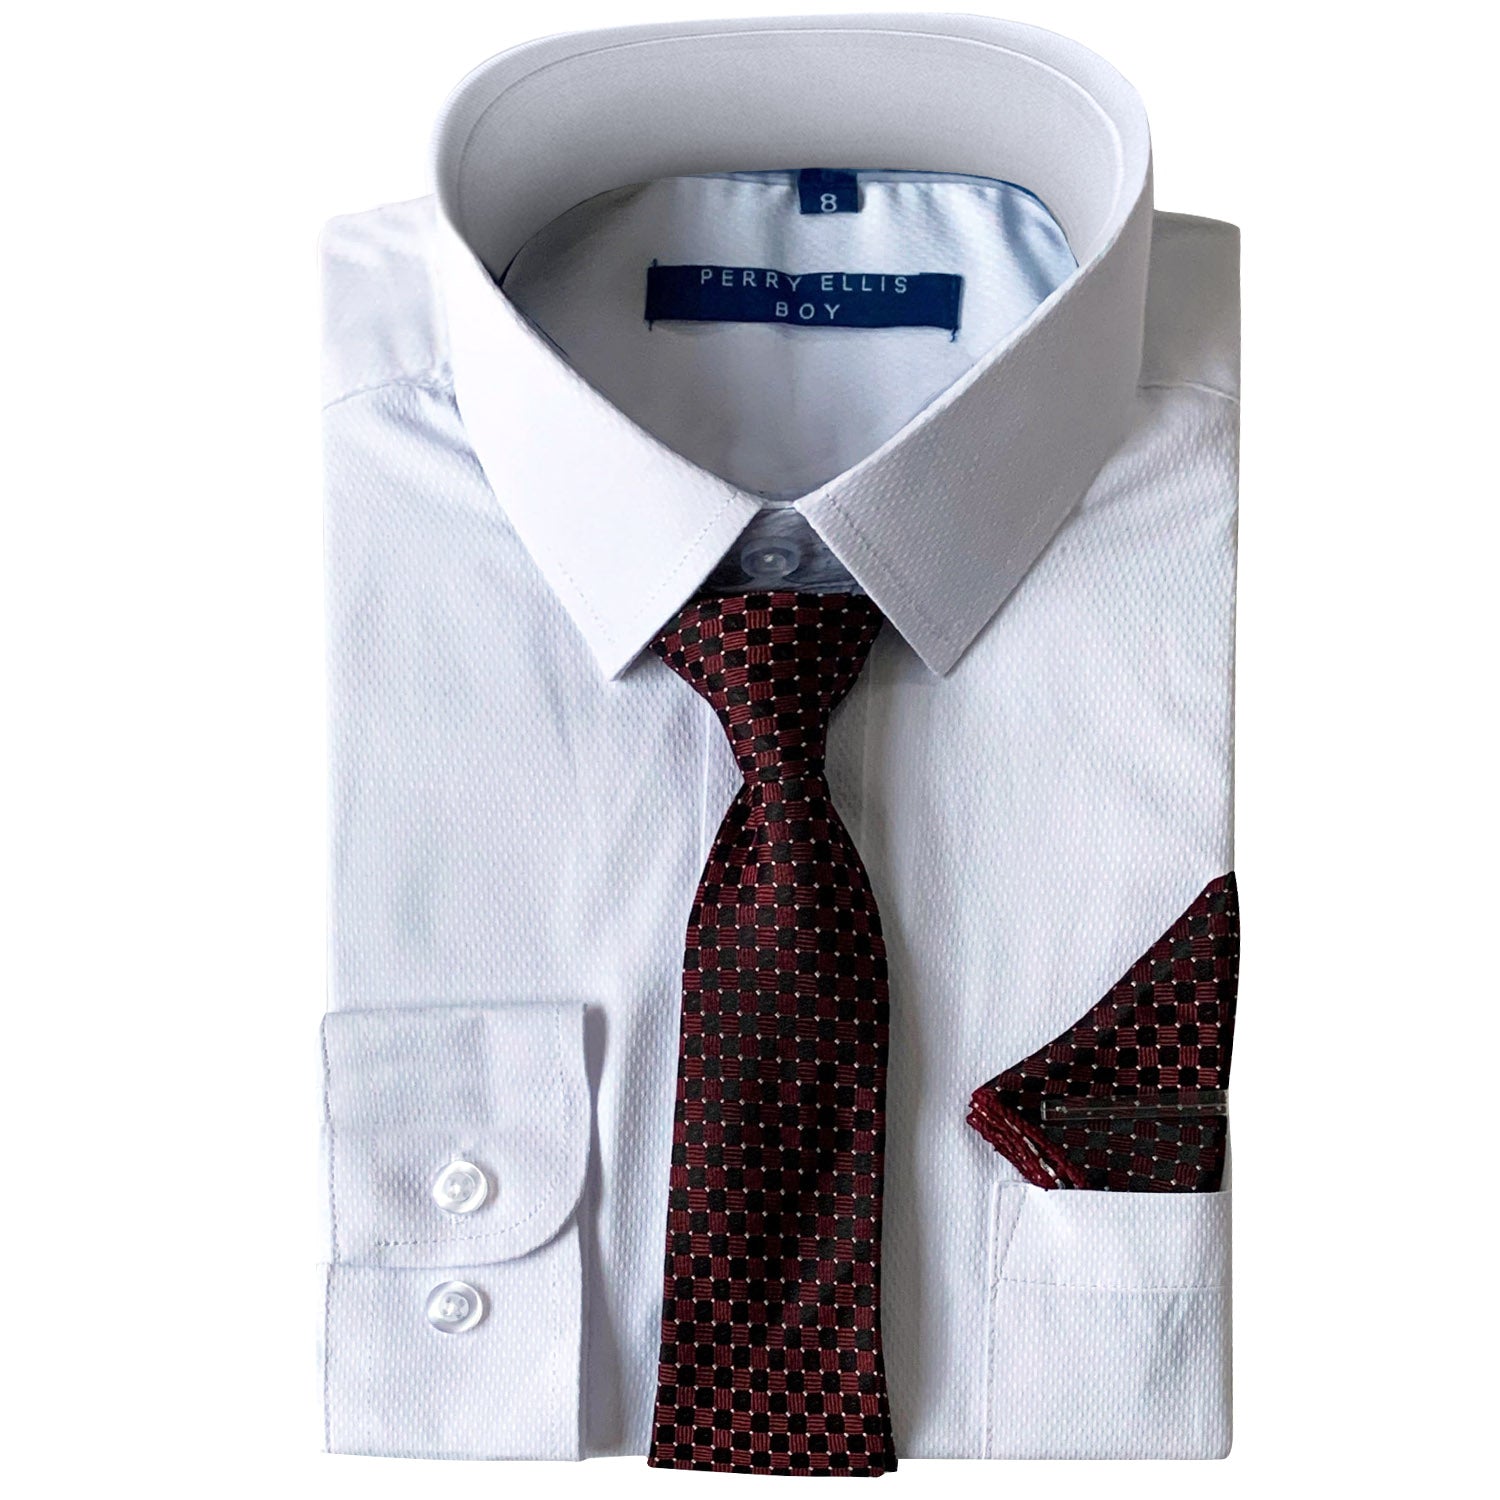 Perry Ellis Boys Dress Shirts w Burgundy Tie Solid Shirts w Patterned Tie